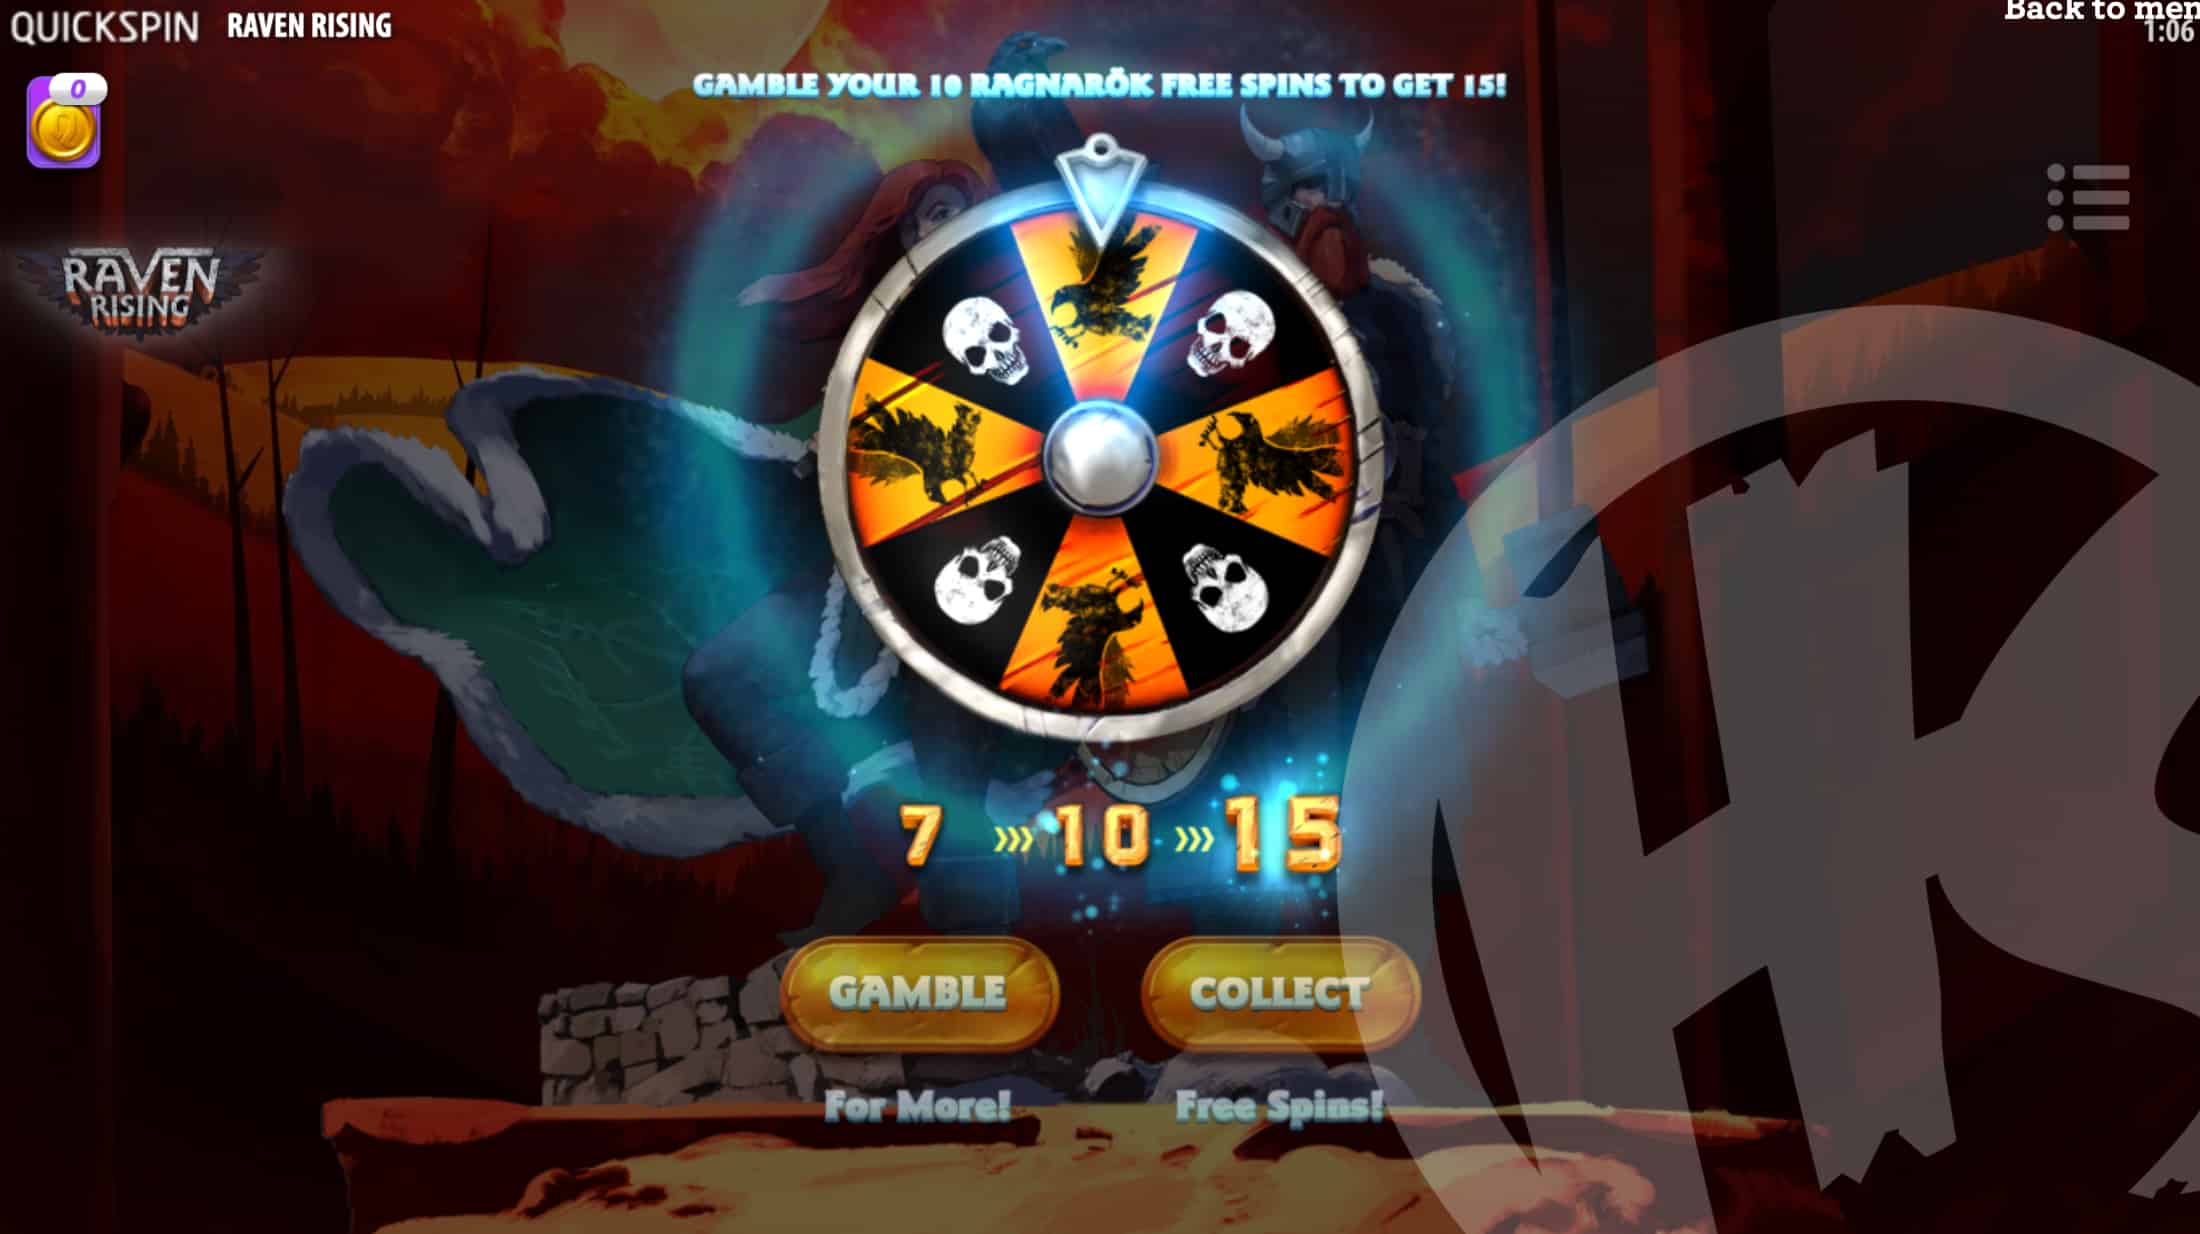 Gamble up to 15 Ragnarök Free Spins